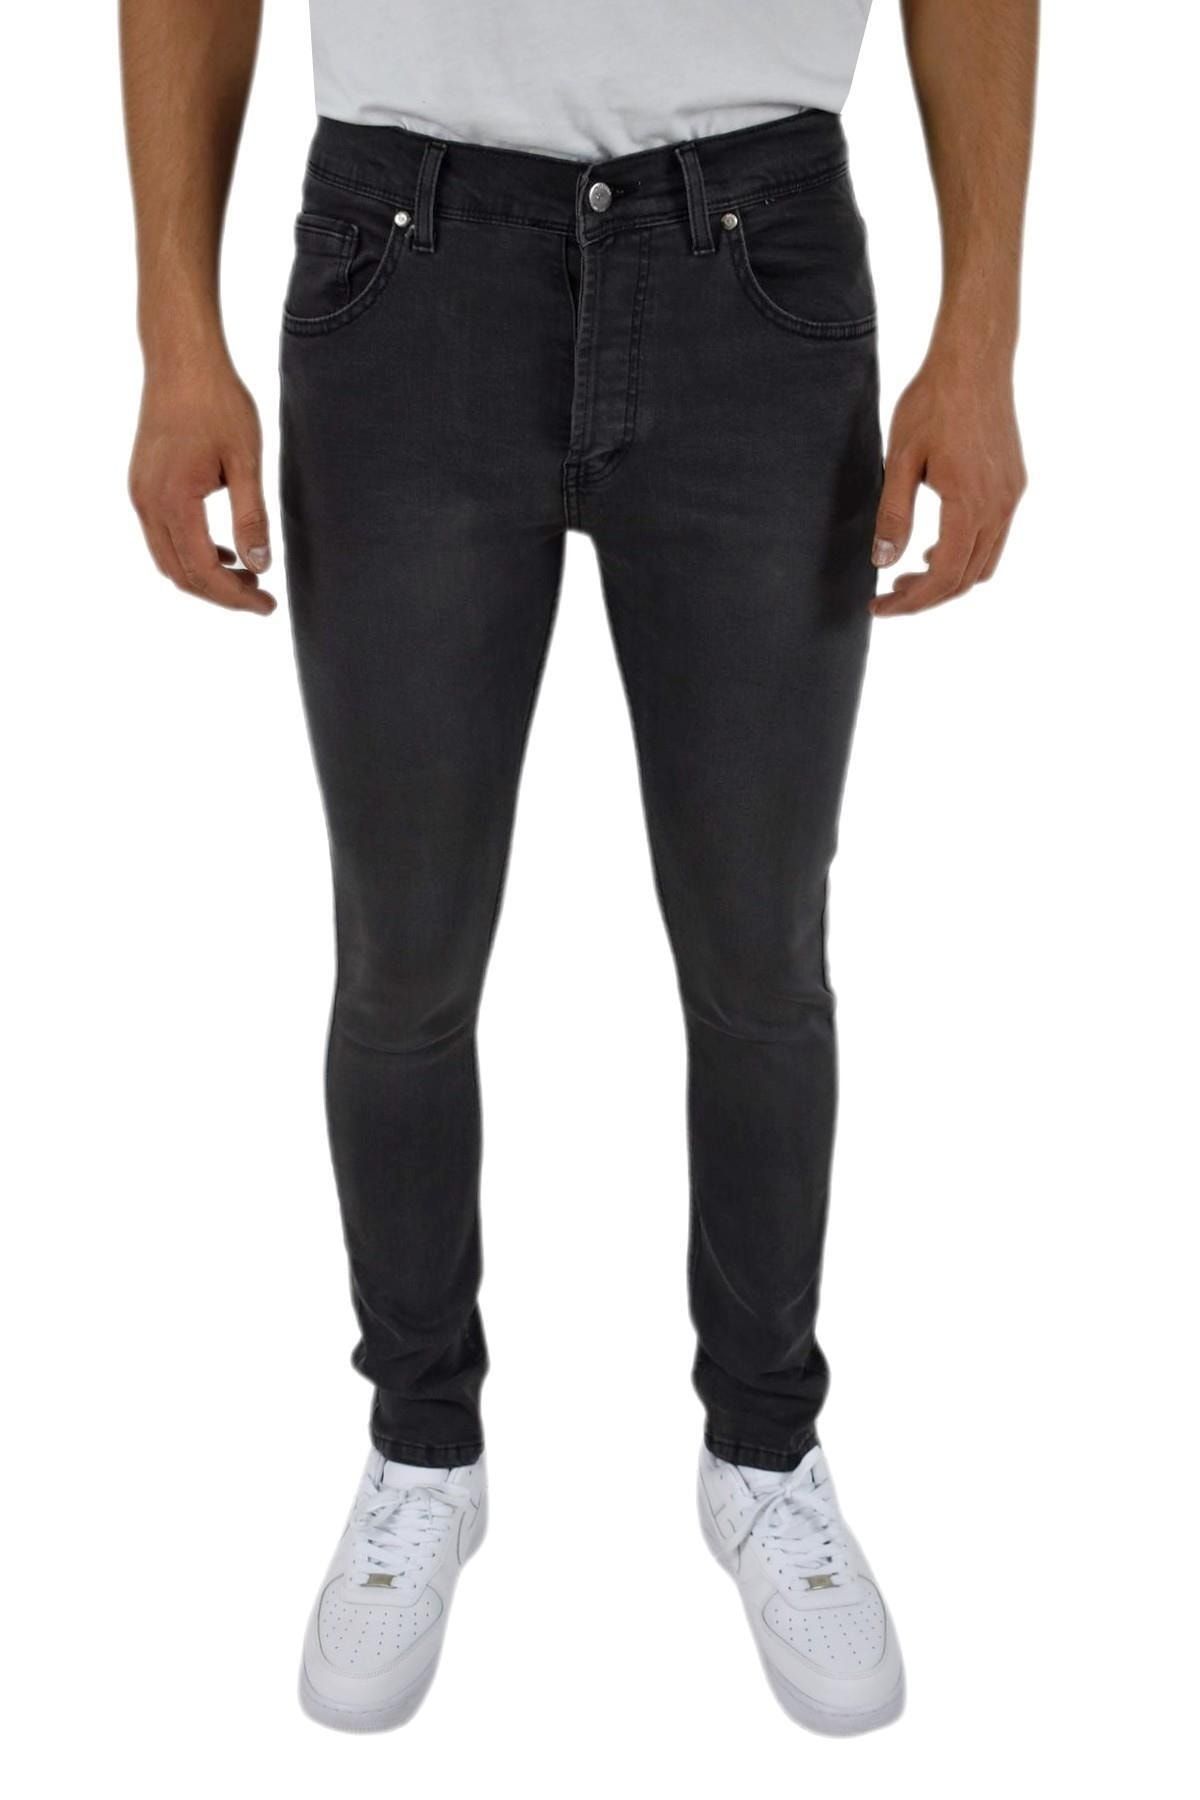 Dynamo Erkek Silim Fit Jeans Pantolon 1502 Bgl-st02912